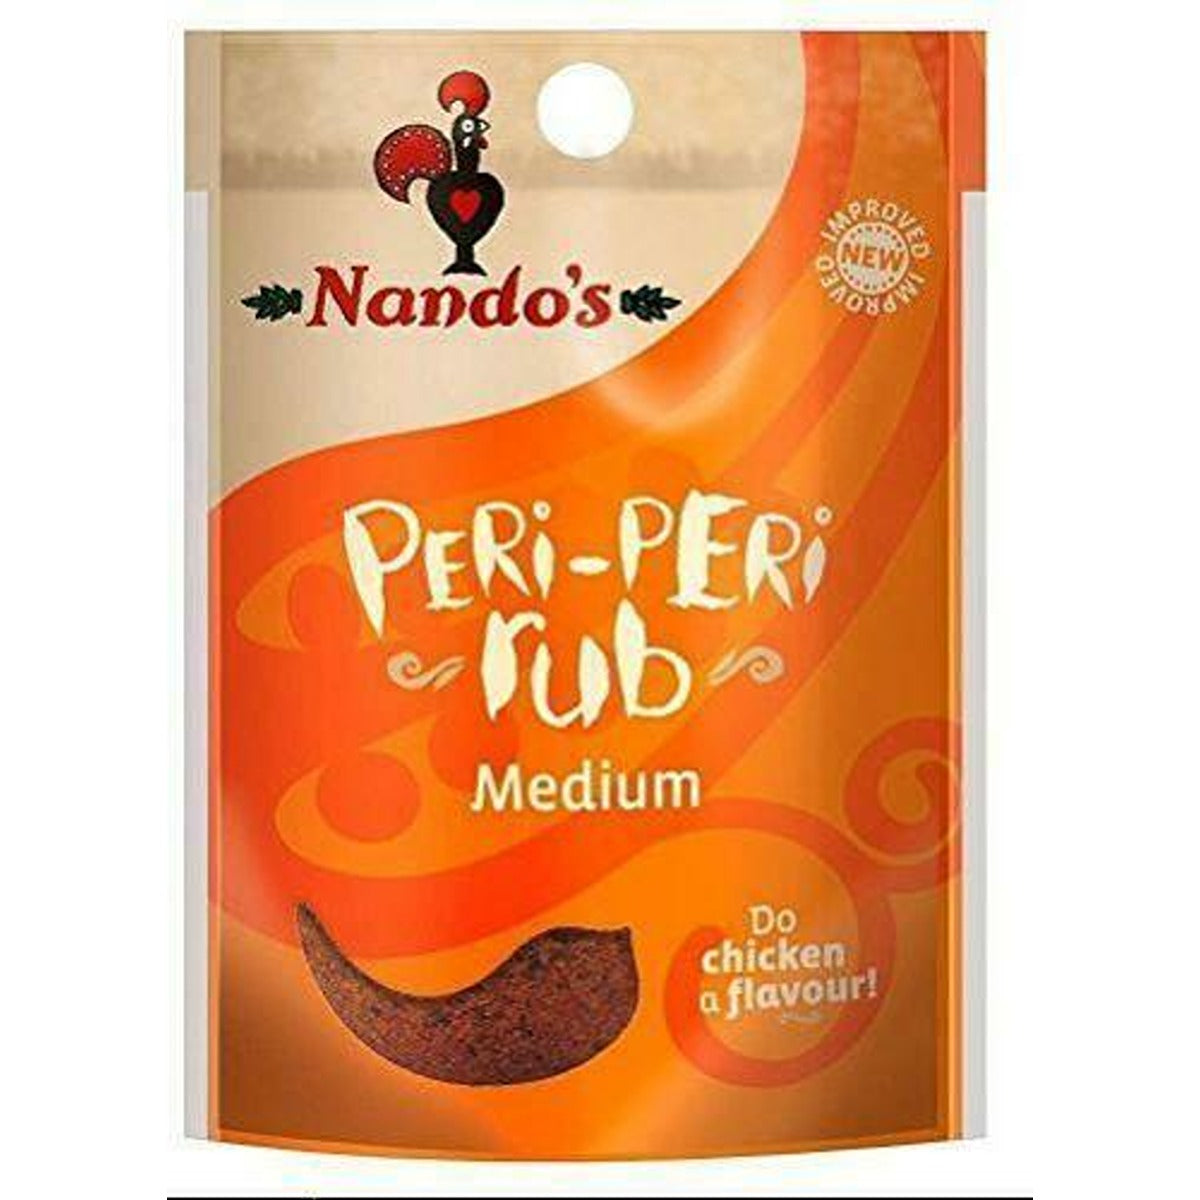 Nando's - Peri-Perii Rub - Medium - 25g, Nando's